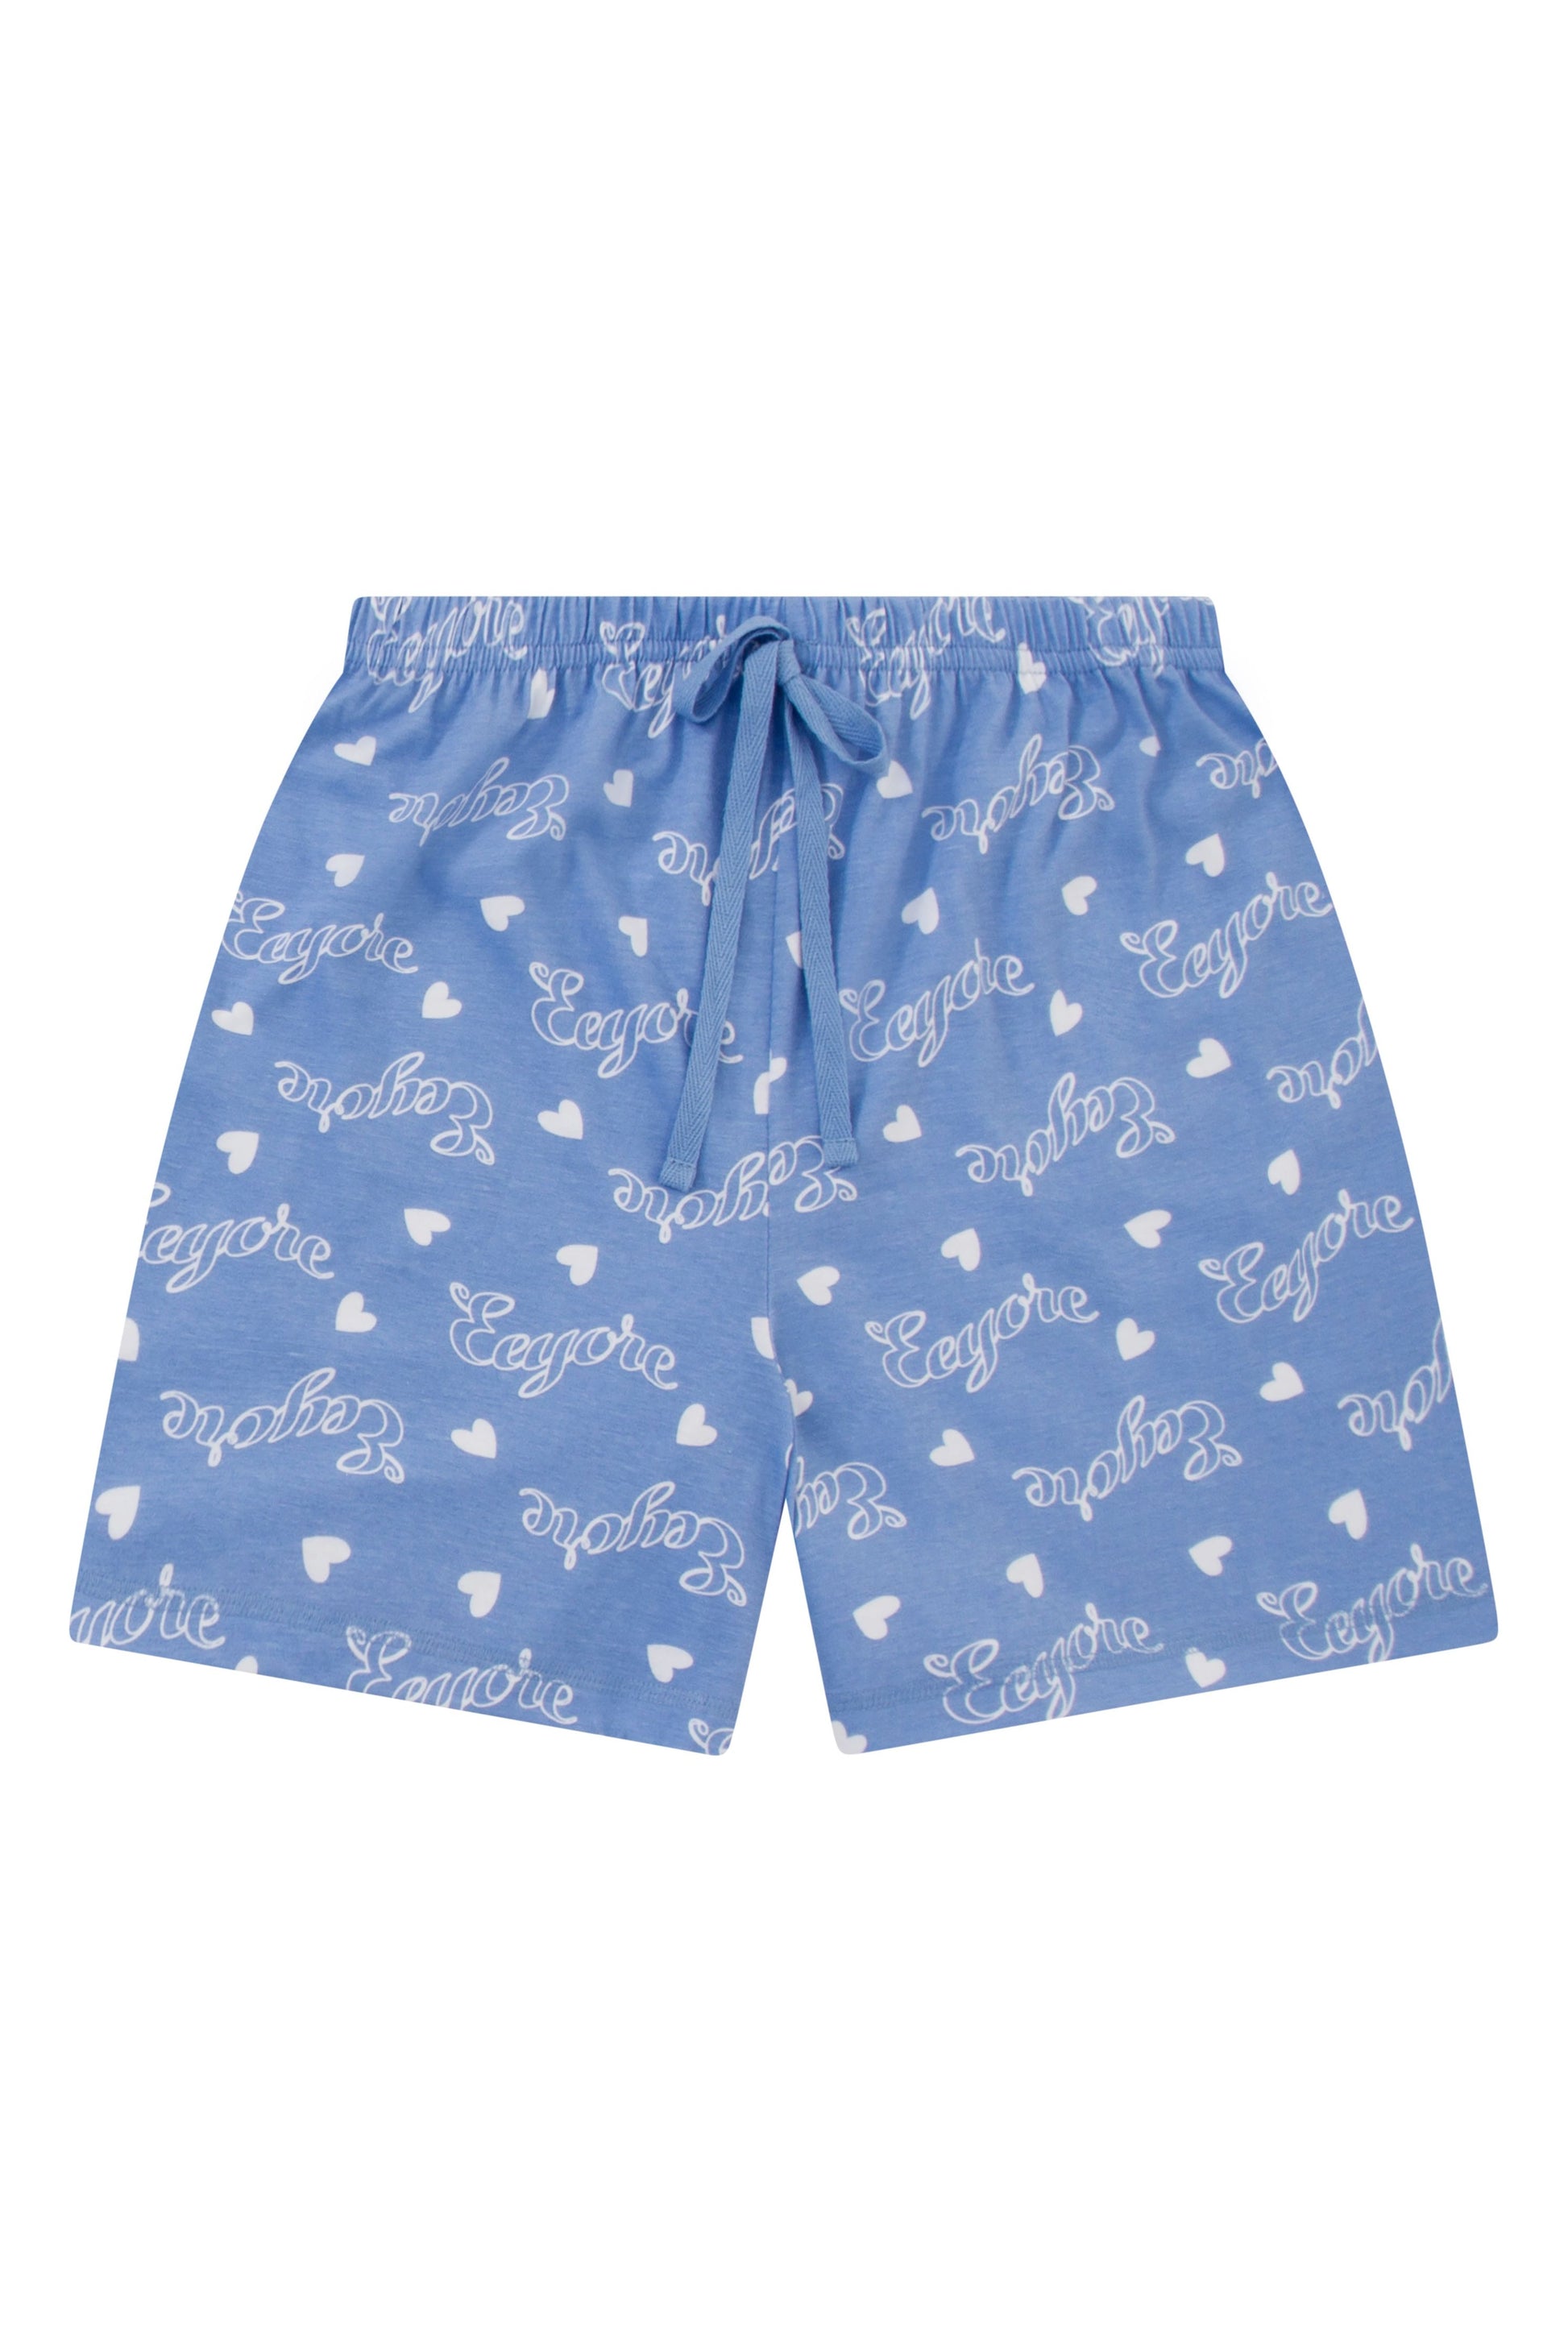 Disney Ladies Eeyore Short Pyjamas - Pyjamas.com